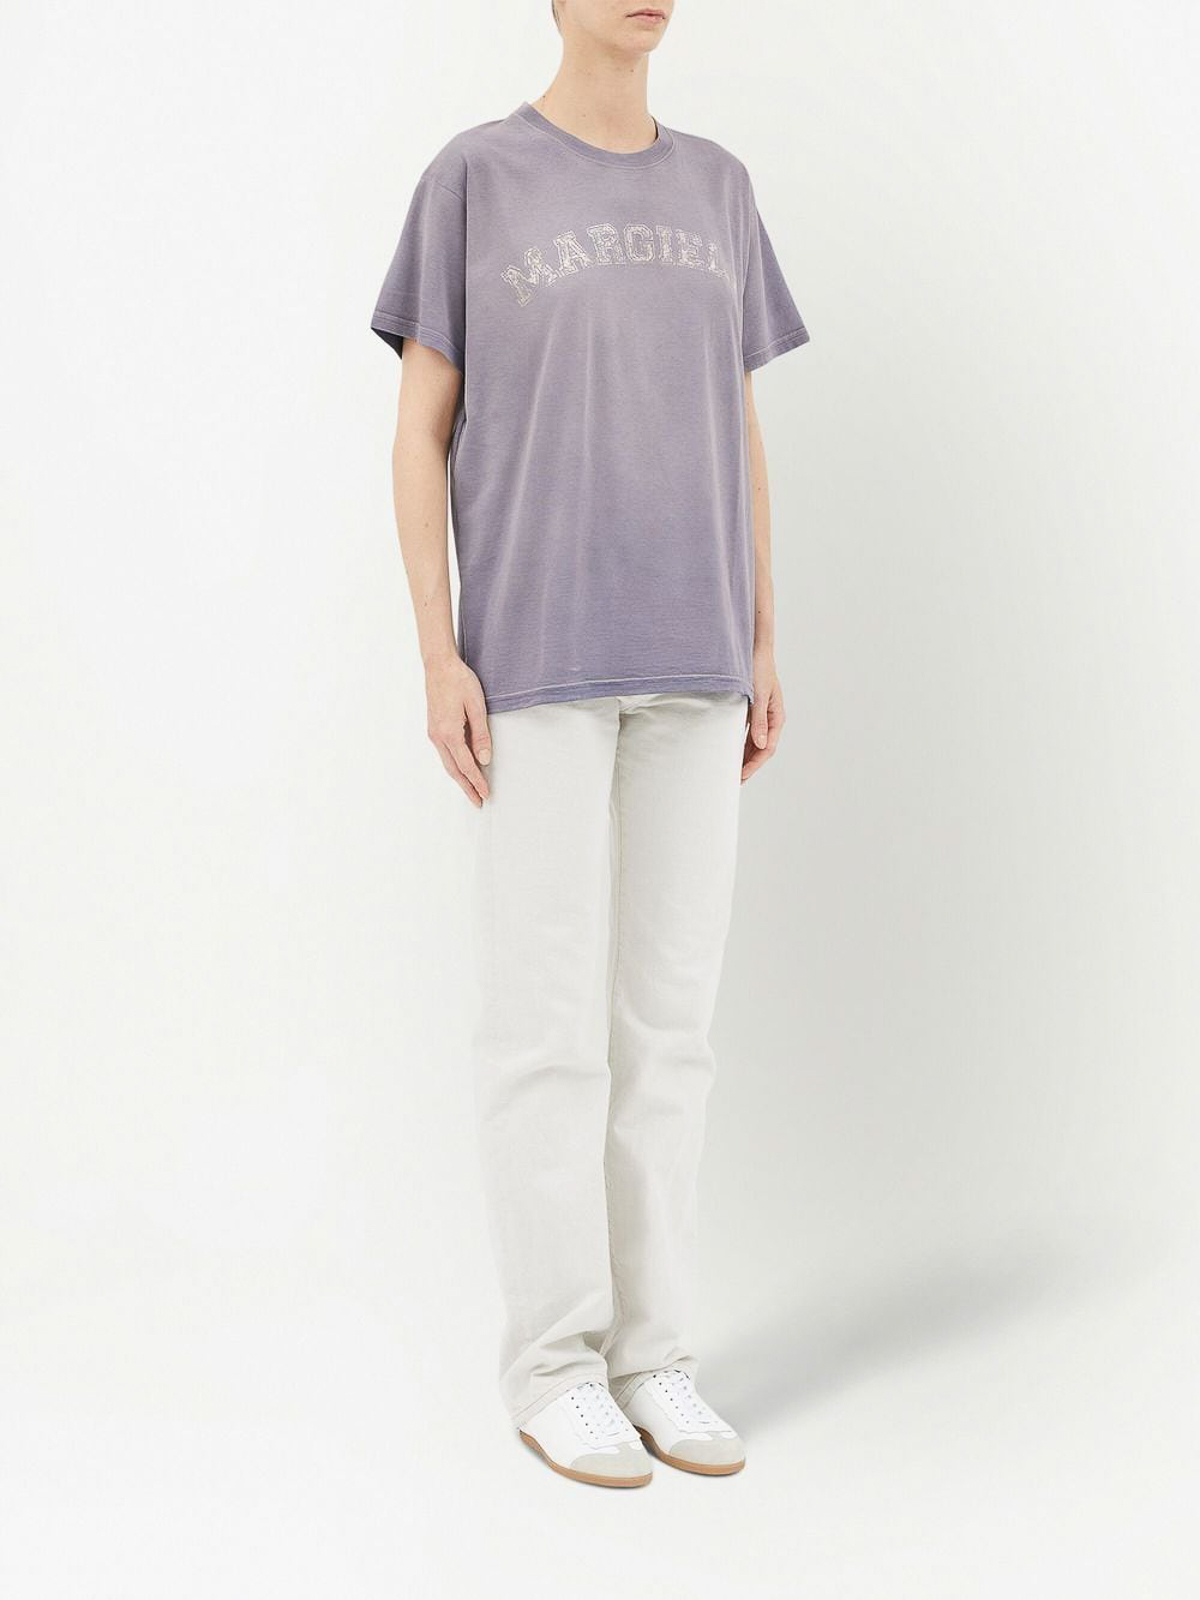 Tシャツ Maison Margiela - Tシャツ - 紫 - S51GC0519S20079225